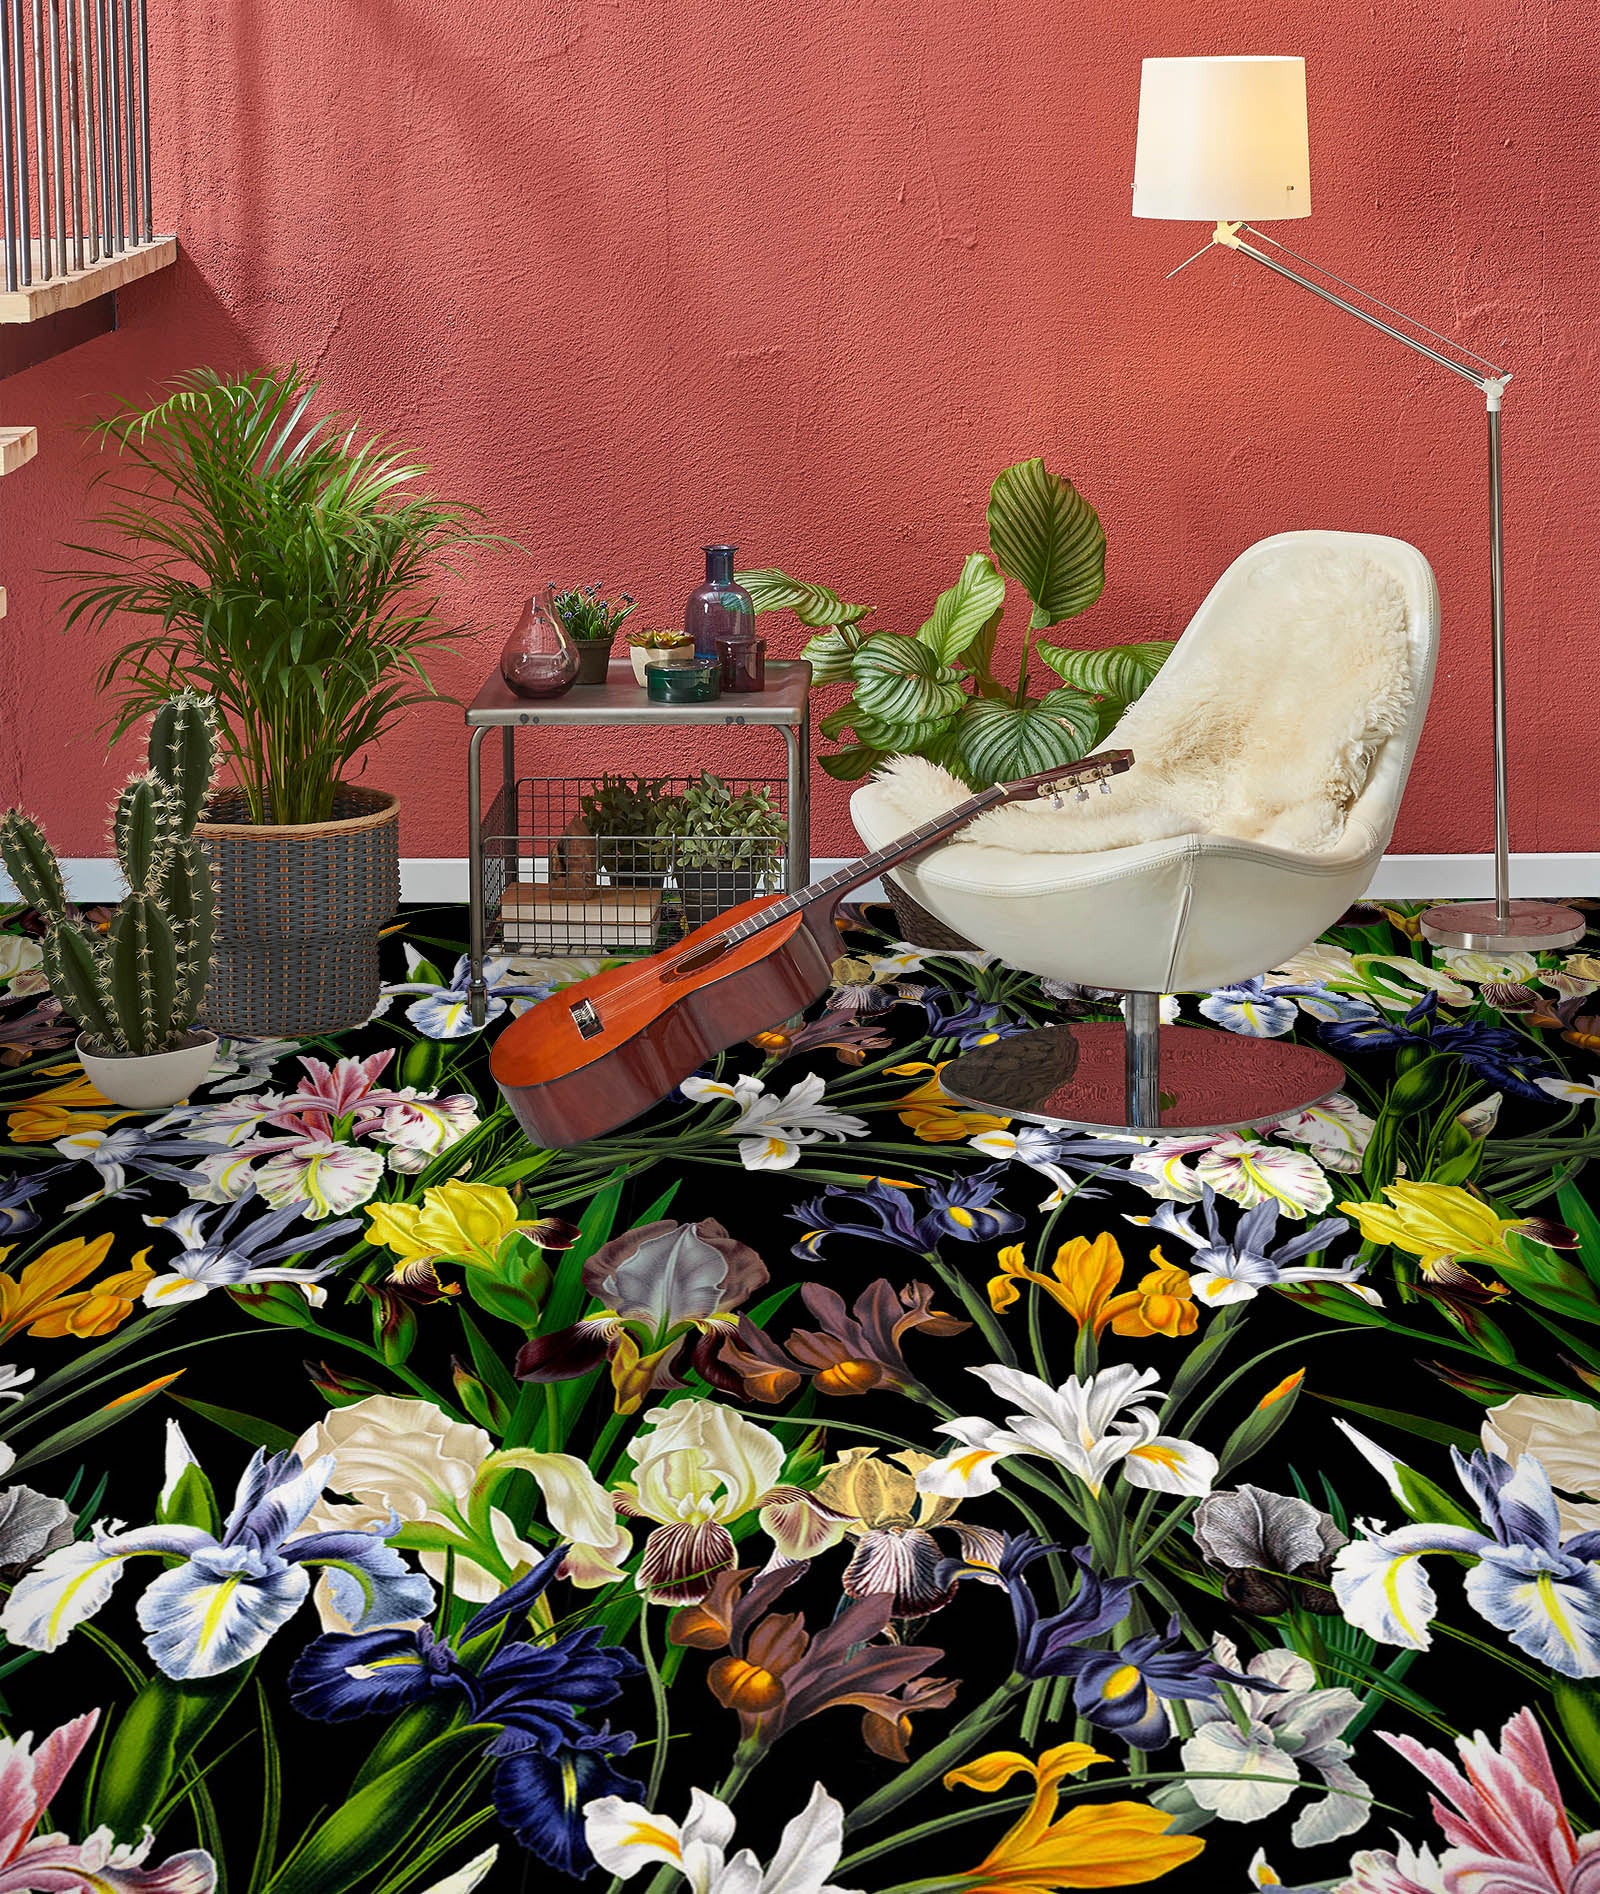 3D Various Colored Flowers 10021 Uta Naumann Floor Mural  Wallpaper Murals Self-Adhesive Removable Print Epoxy